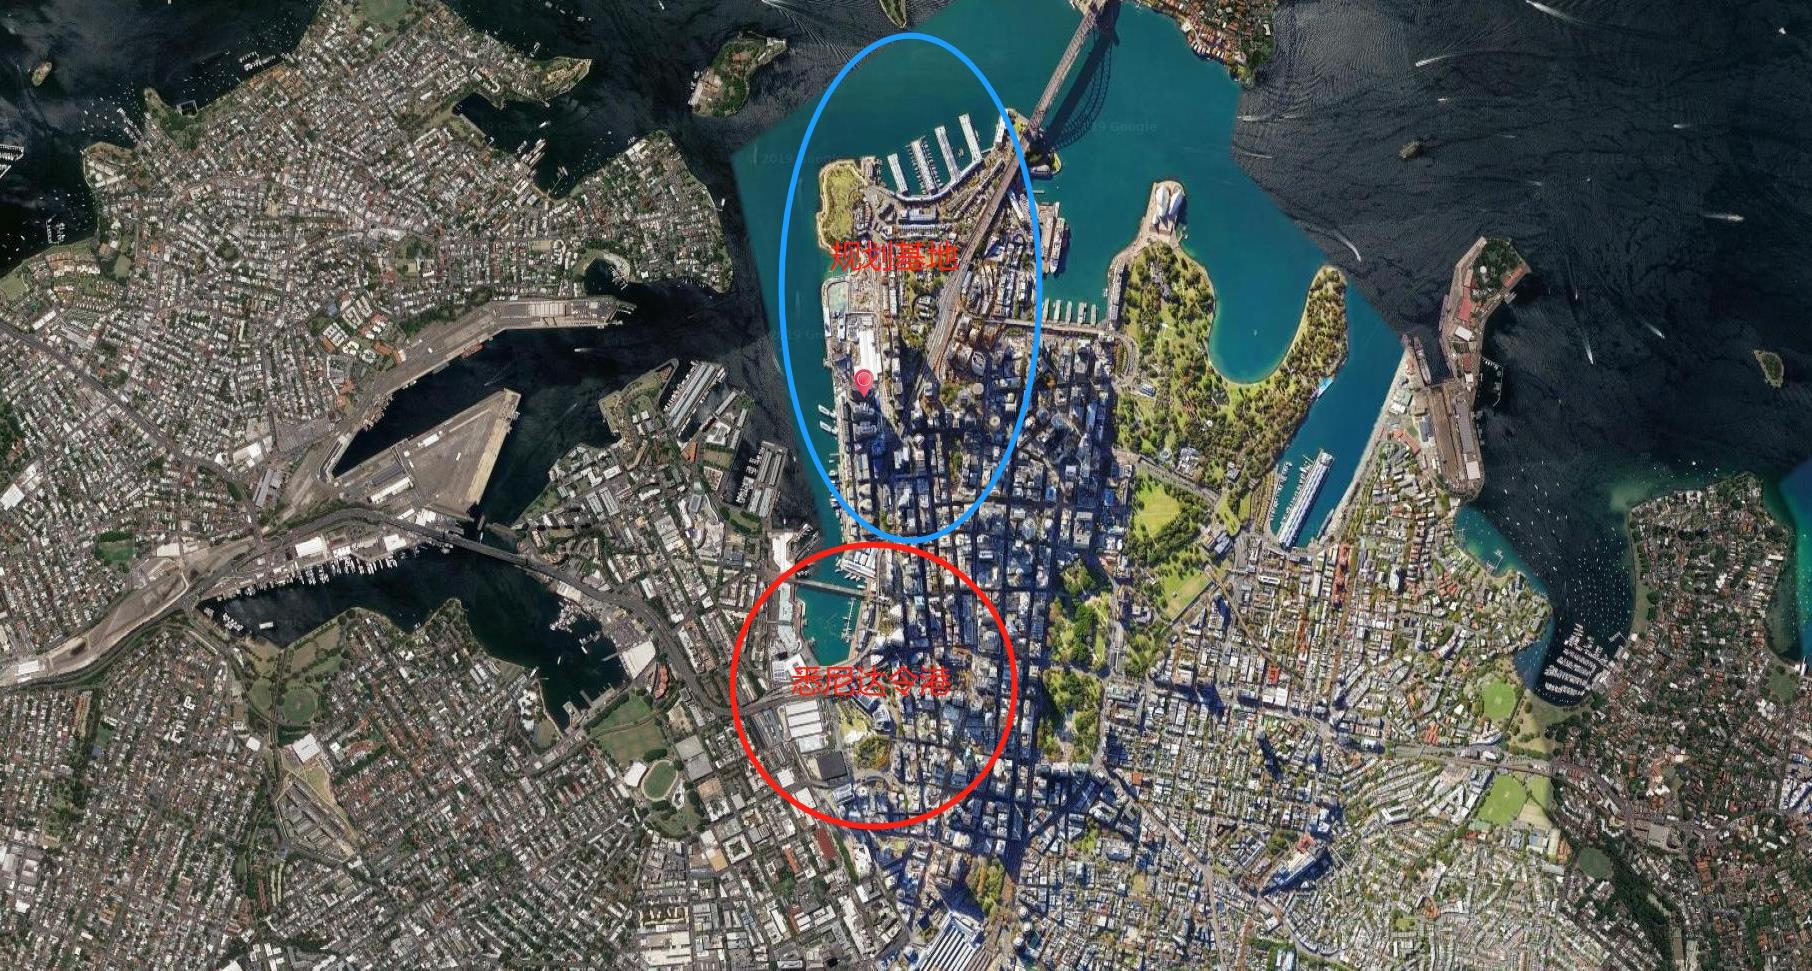 Waterfront design: master plan of barangaroo south area in Sydney